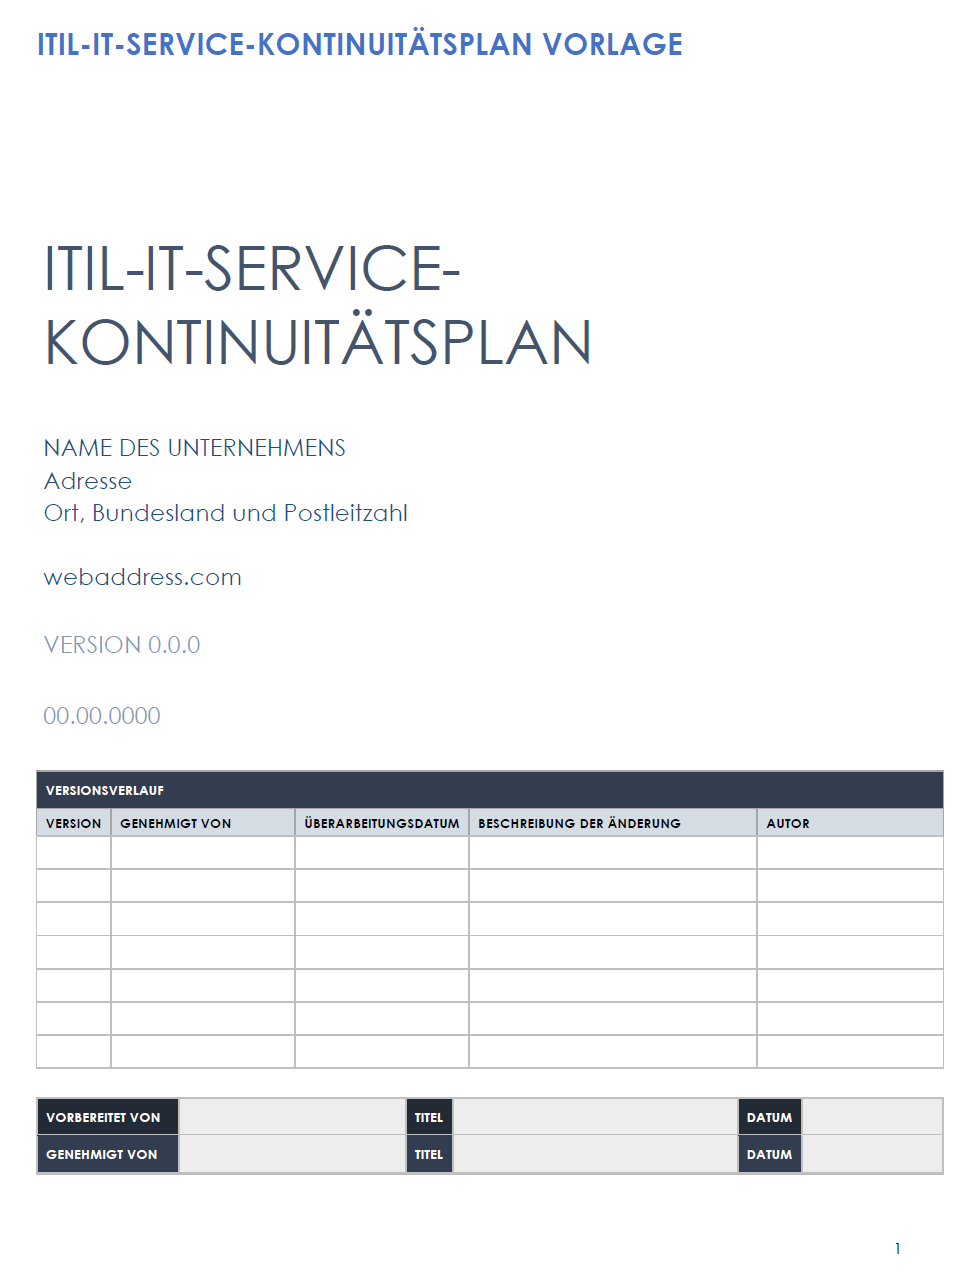  itil IT-Service-Kontinuitätsplan-Vorlage